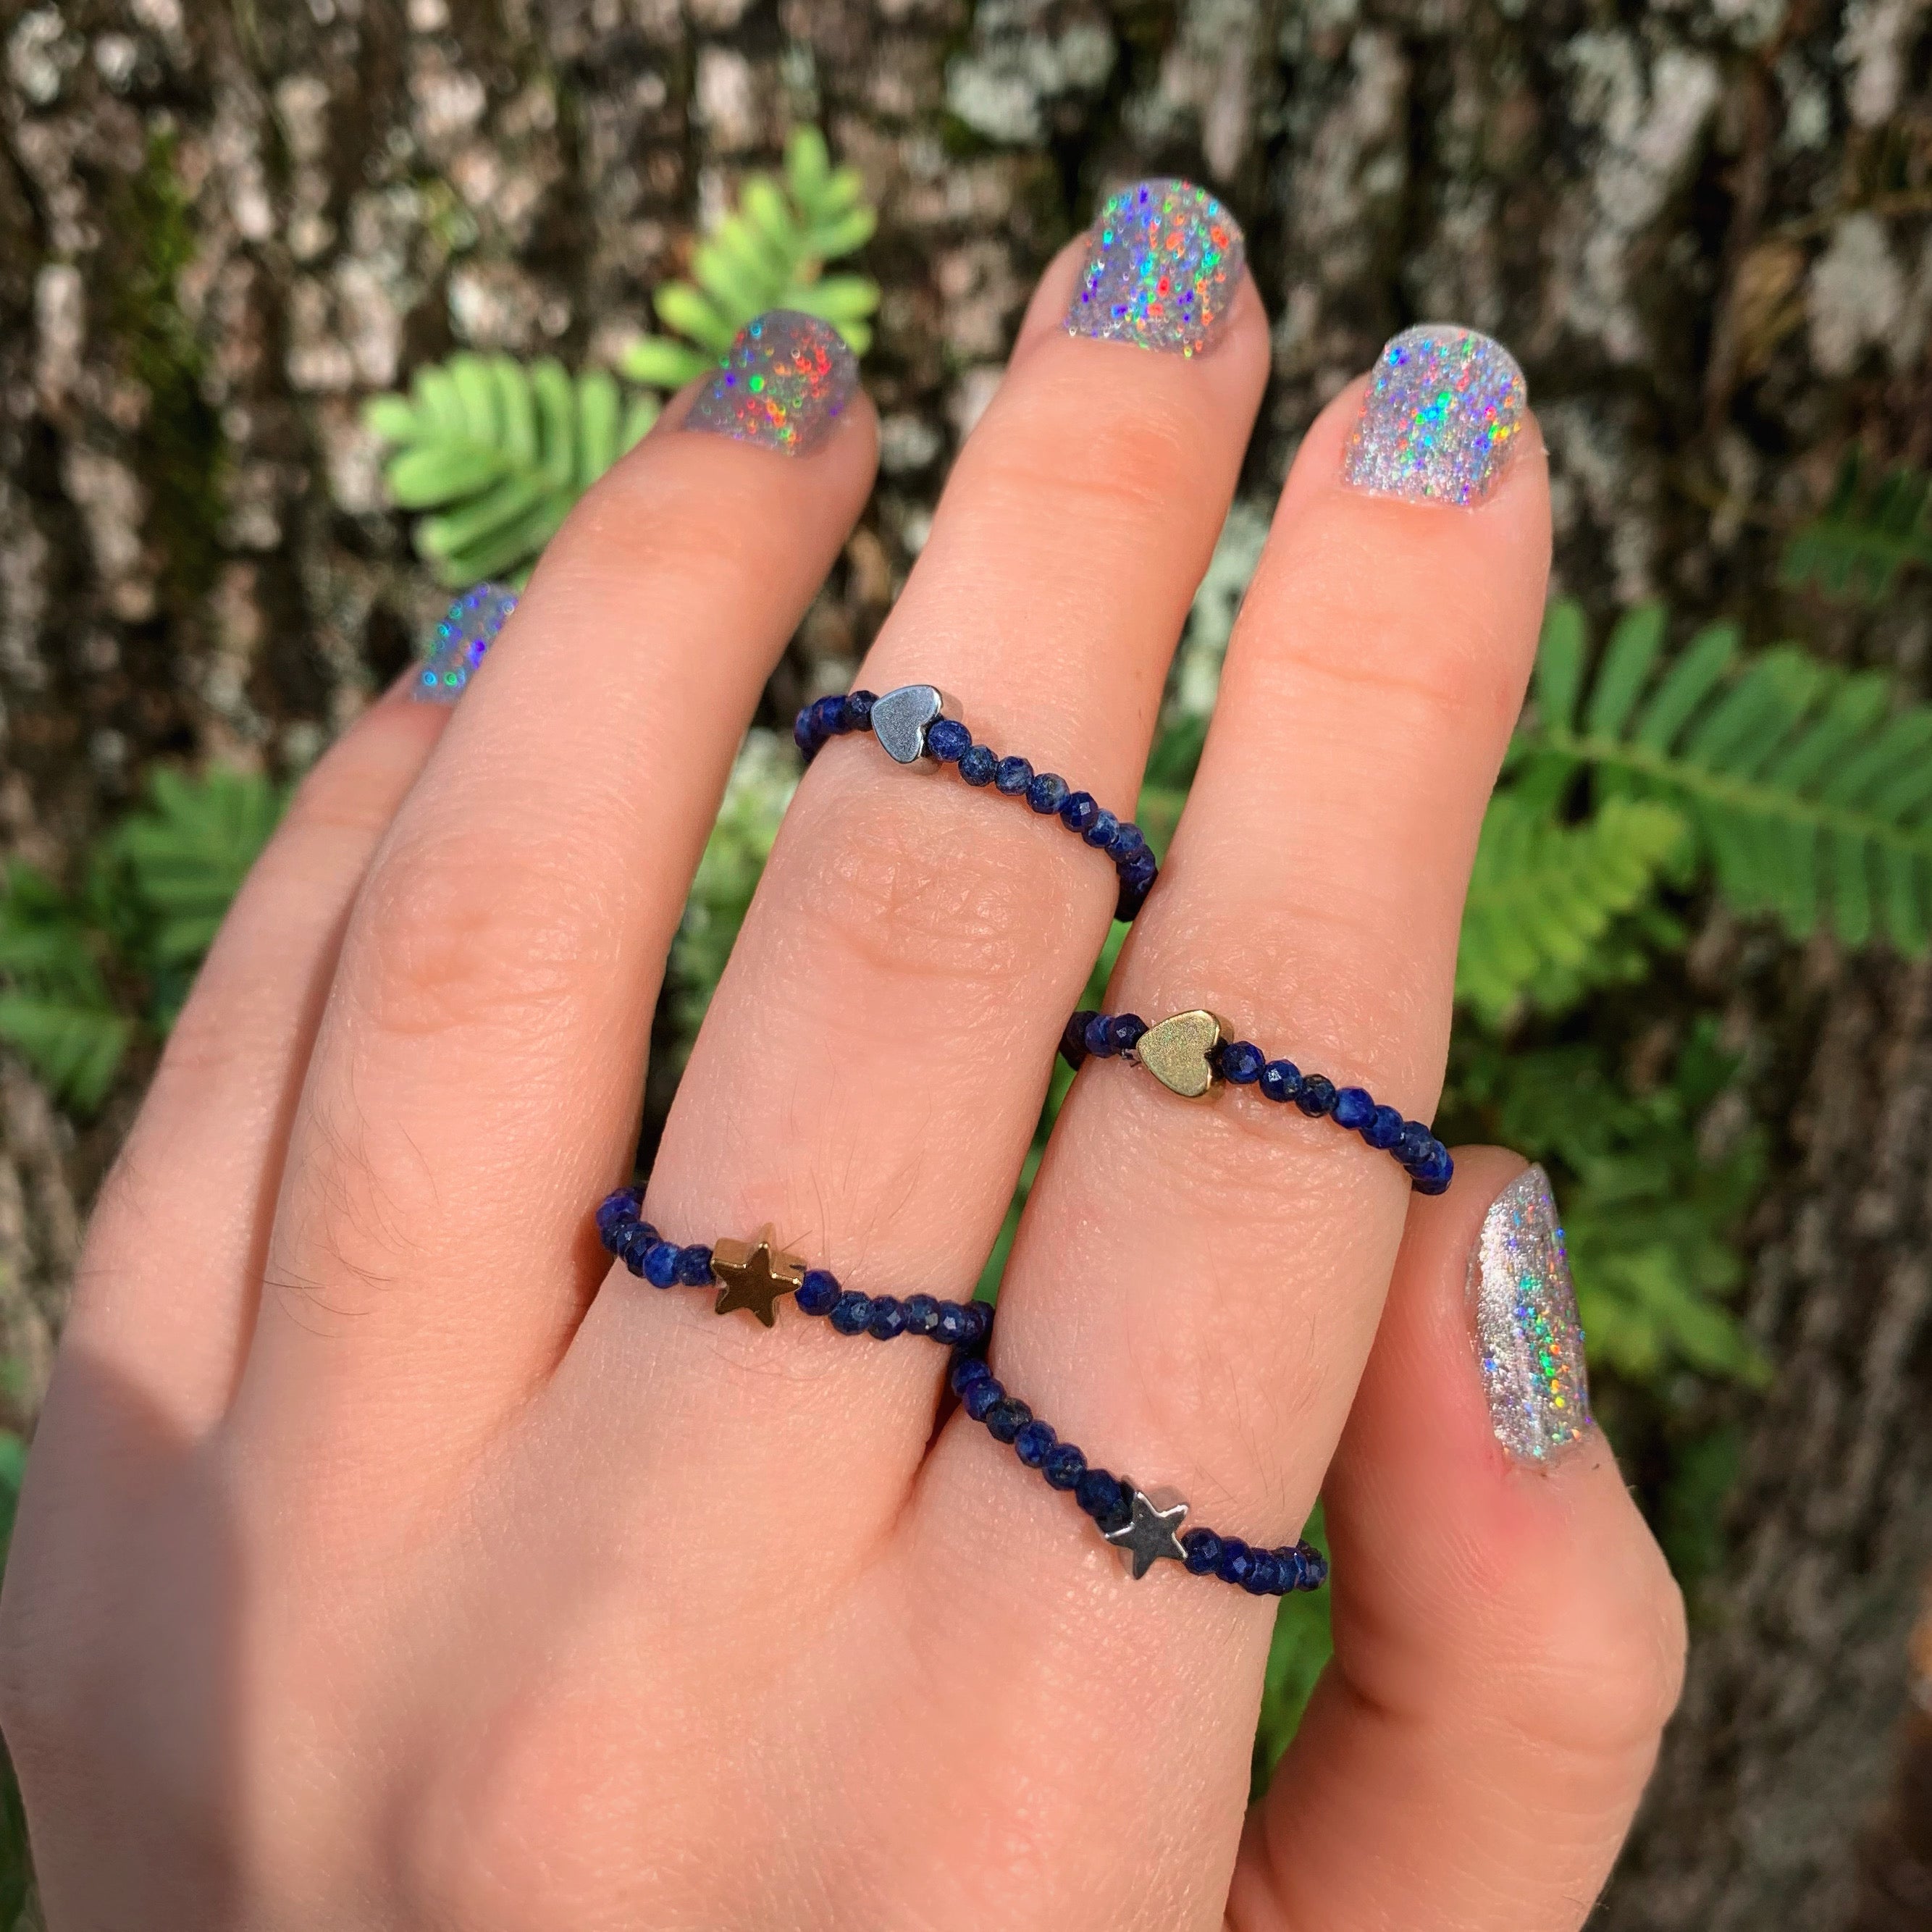 Faceted Lapis Lazuli Ring